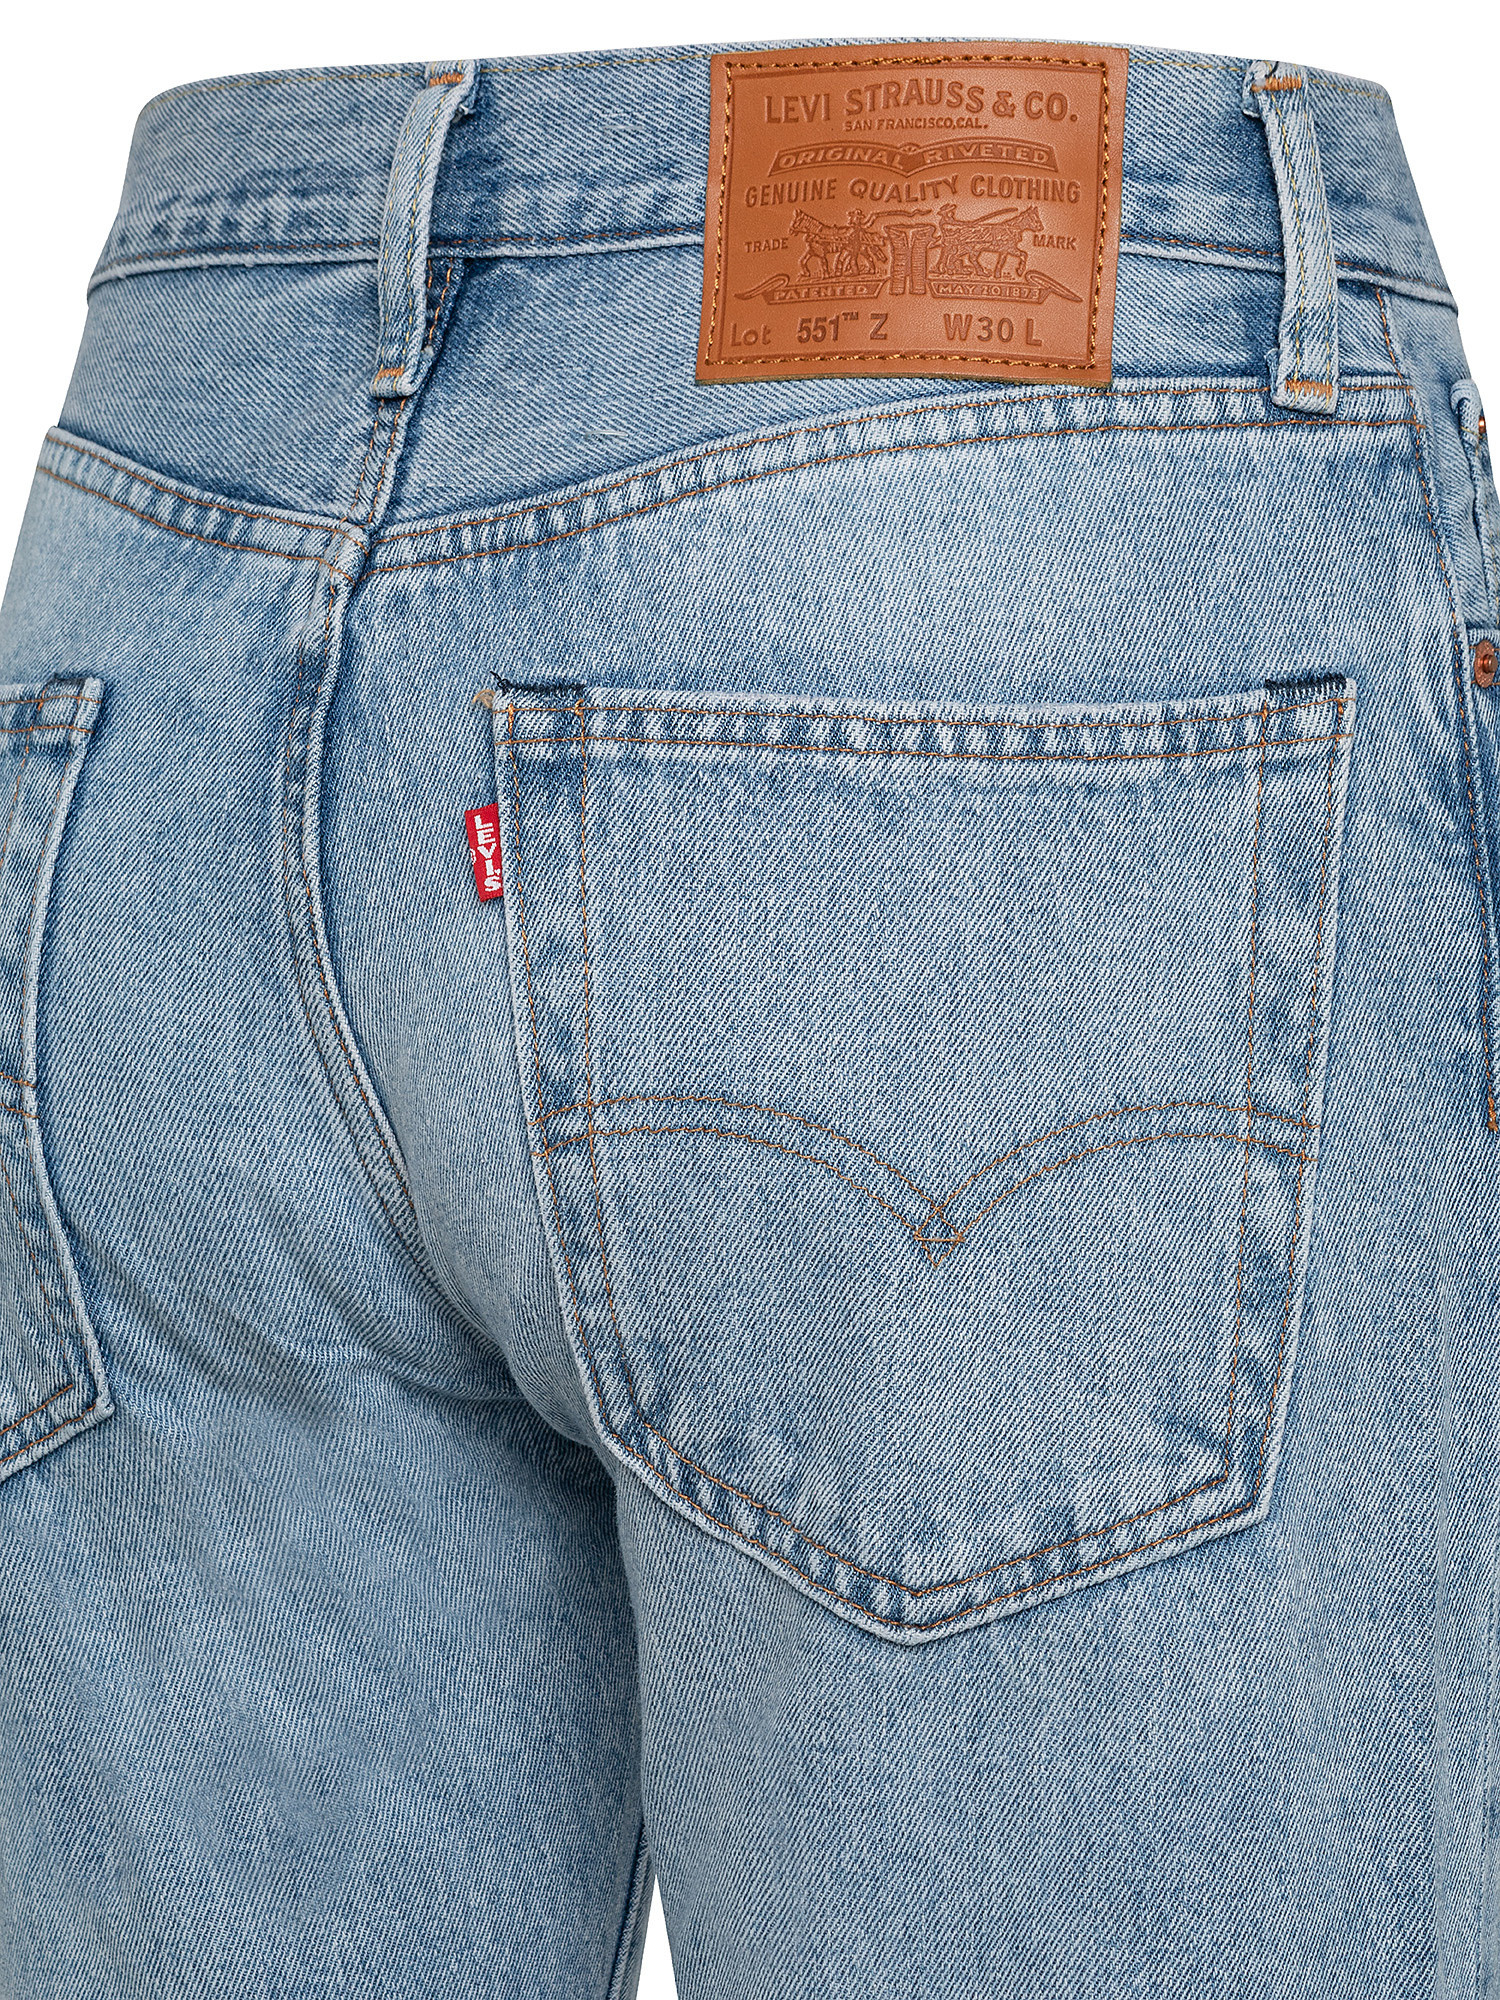 Jeans cinque tasche, Blu, large image number 2